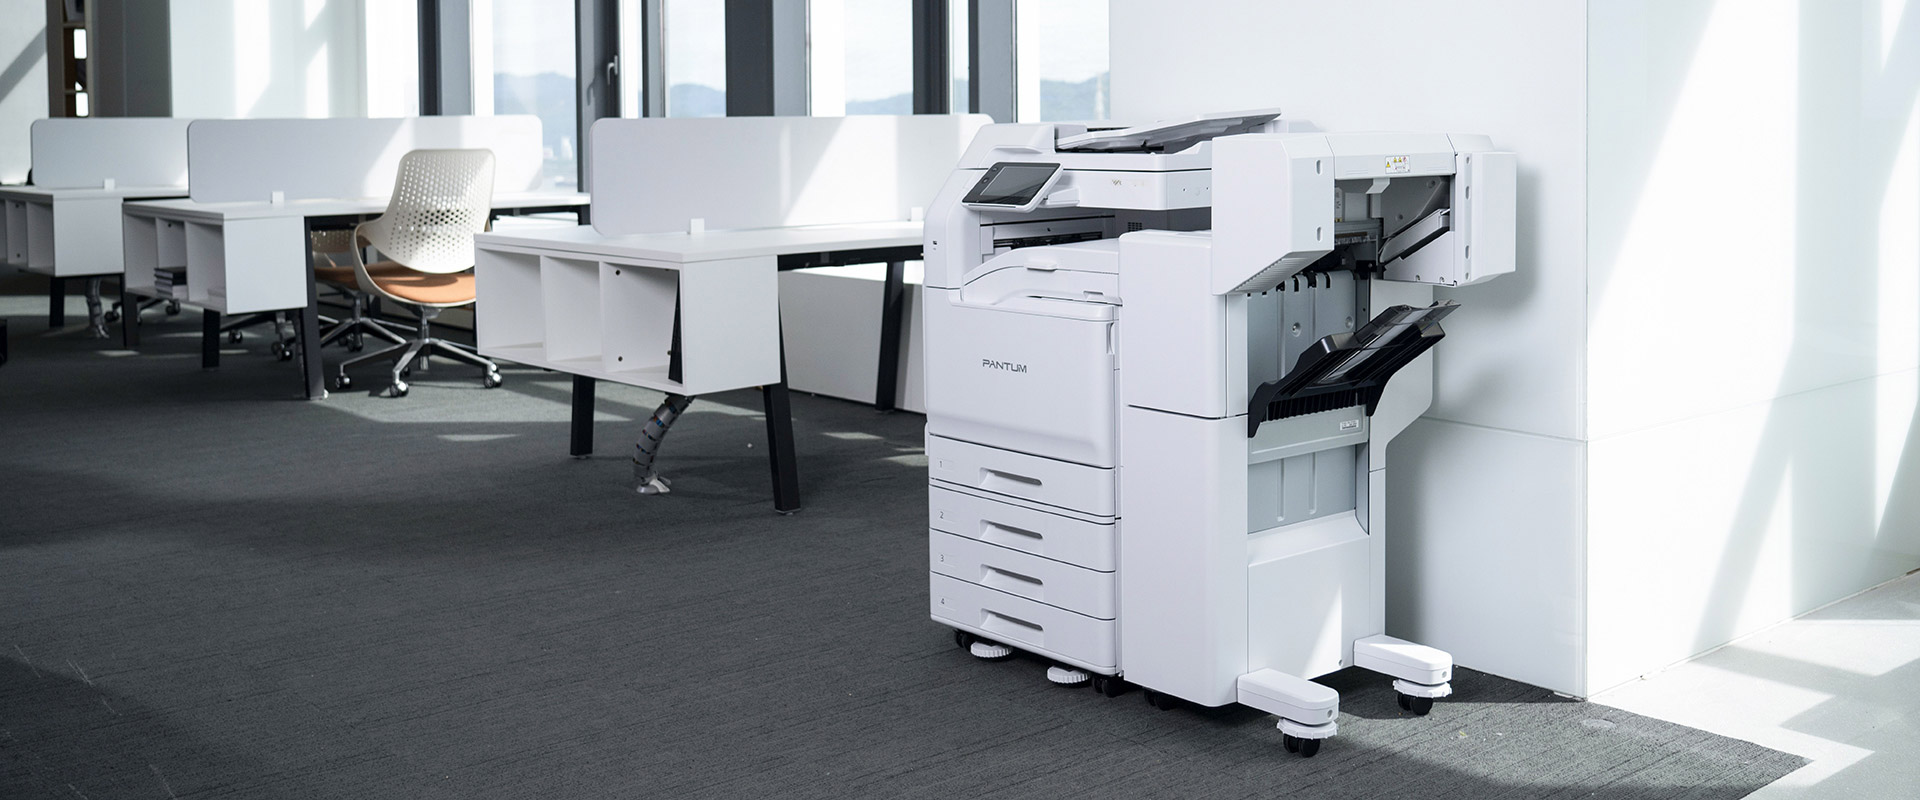 Pantum Introduces Ultra Series Printers